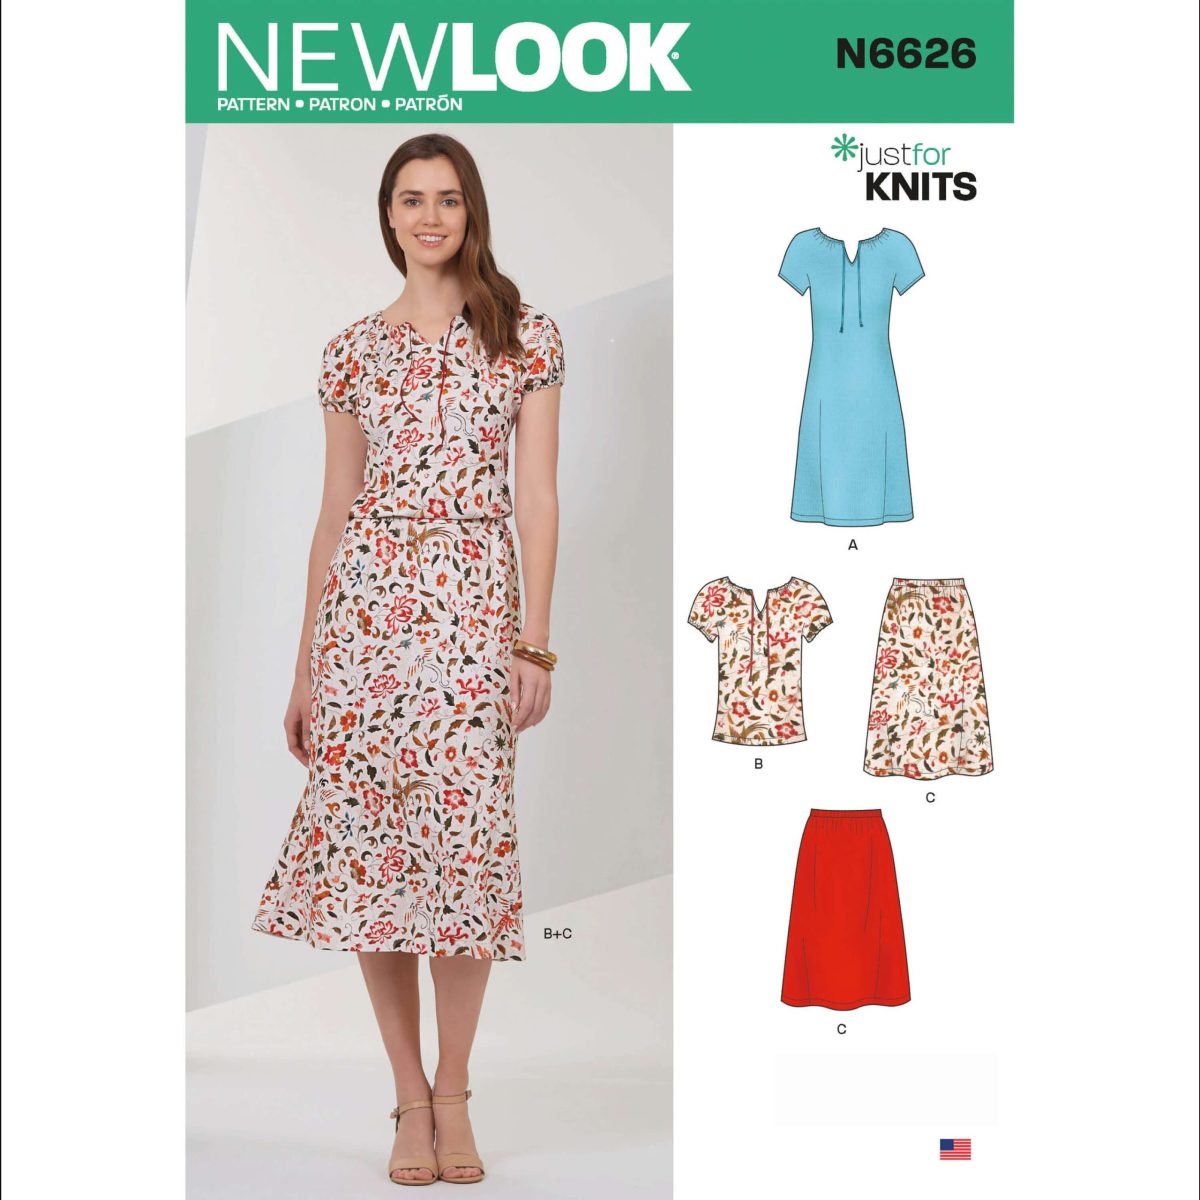 New Look Sewing Pattern N6626 Misses' Sportswear